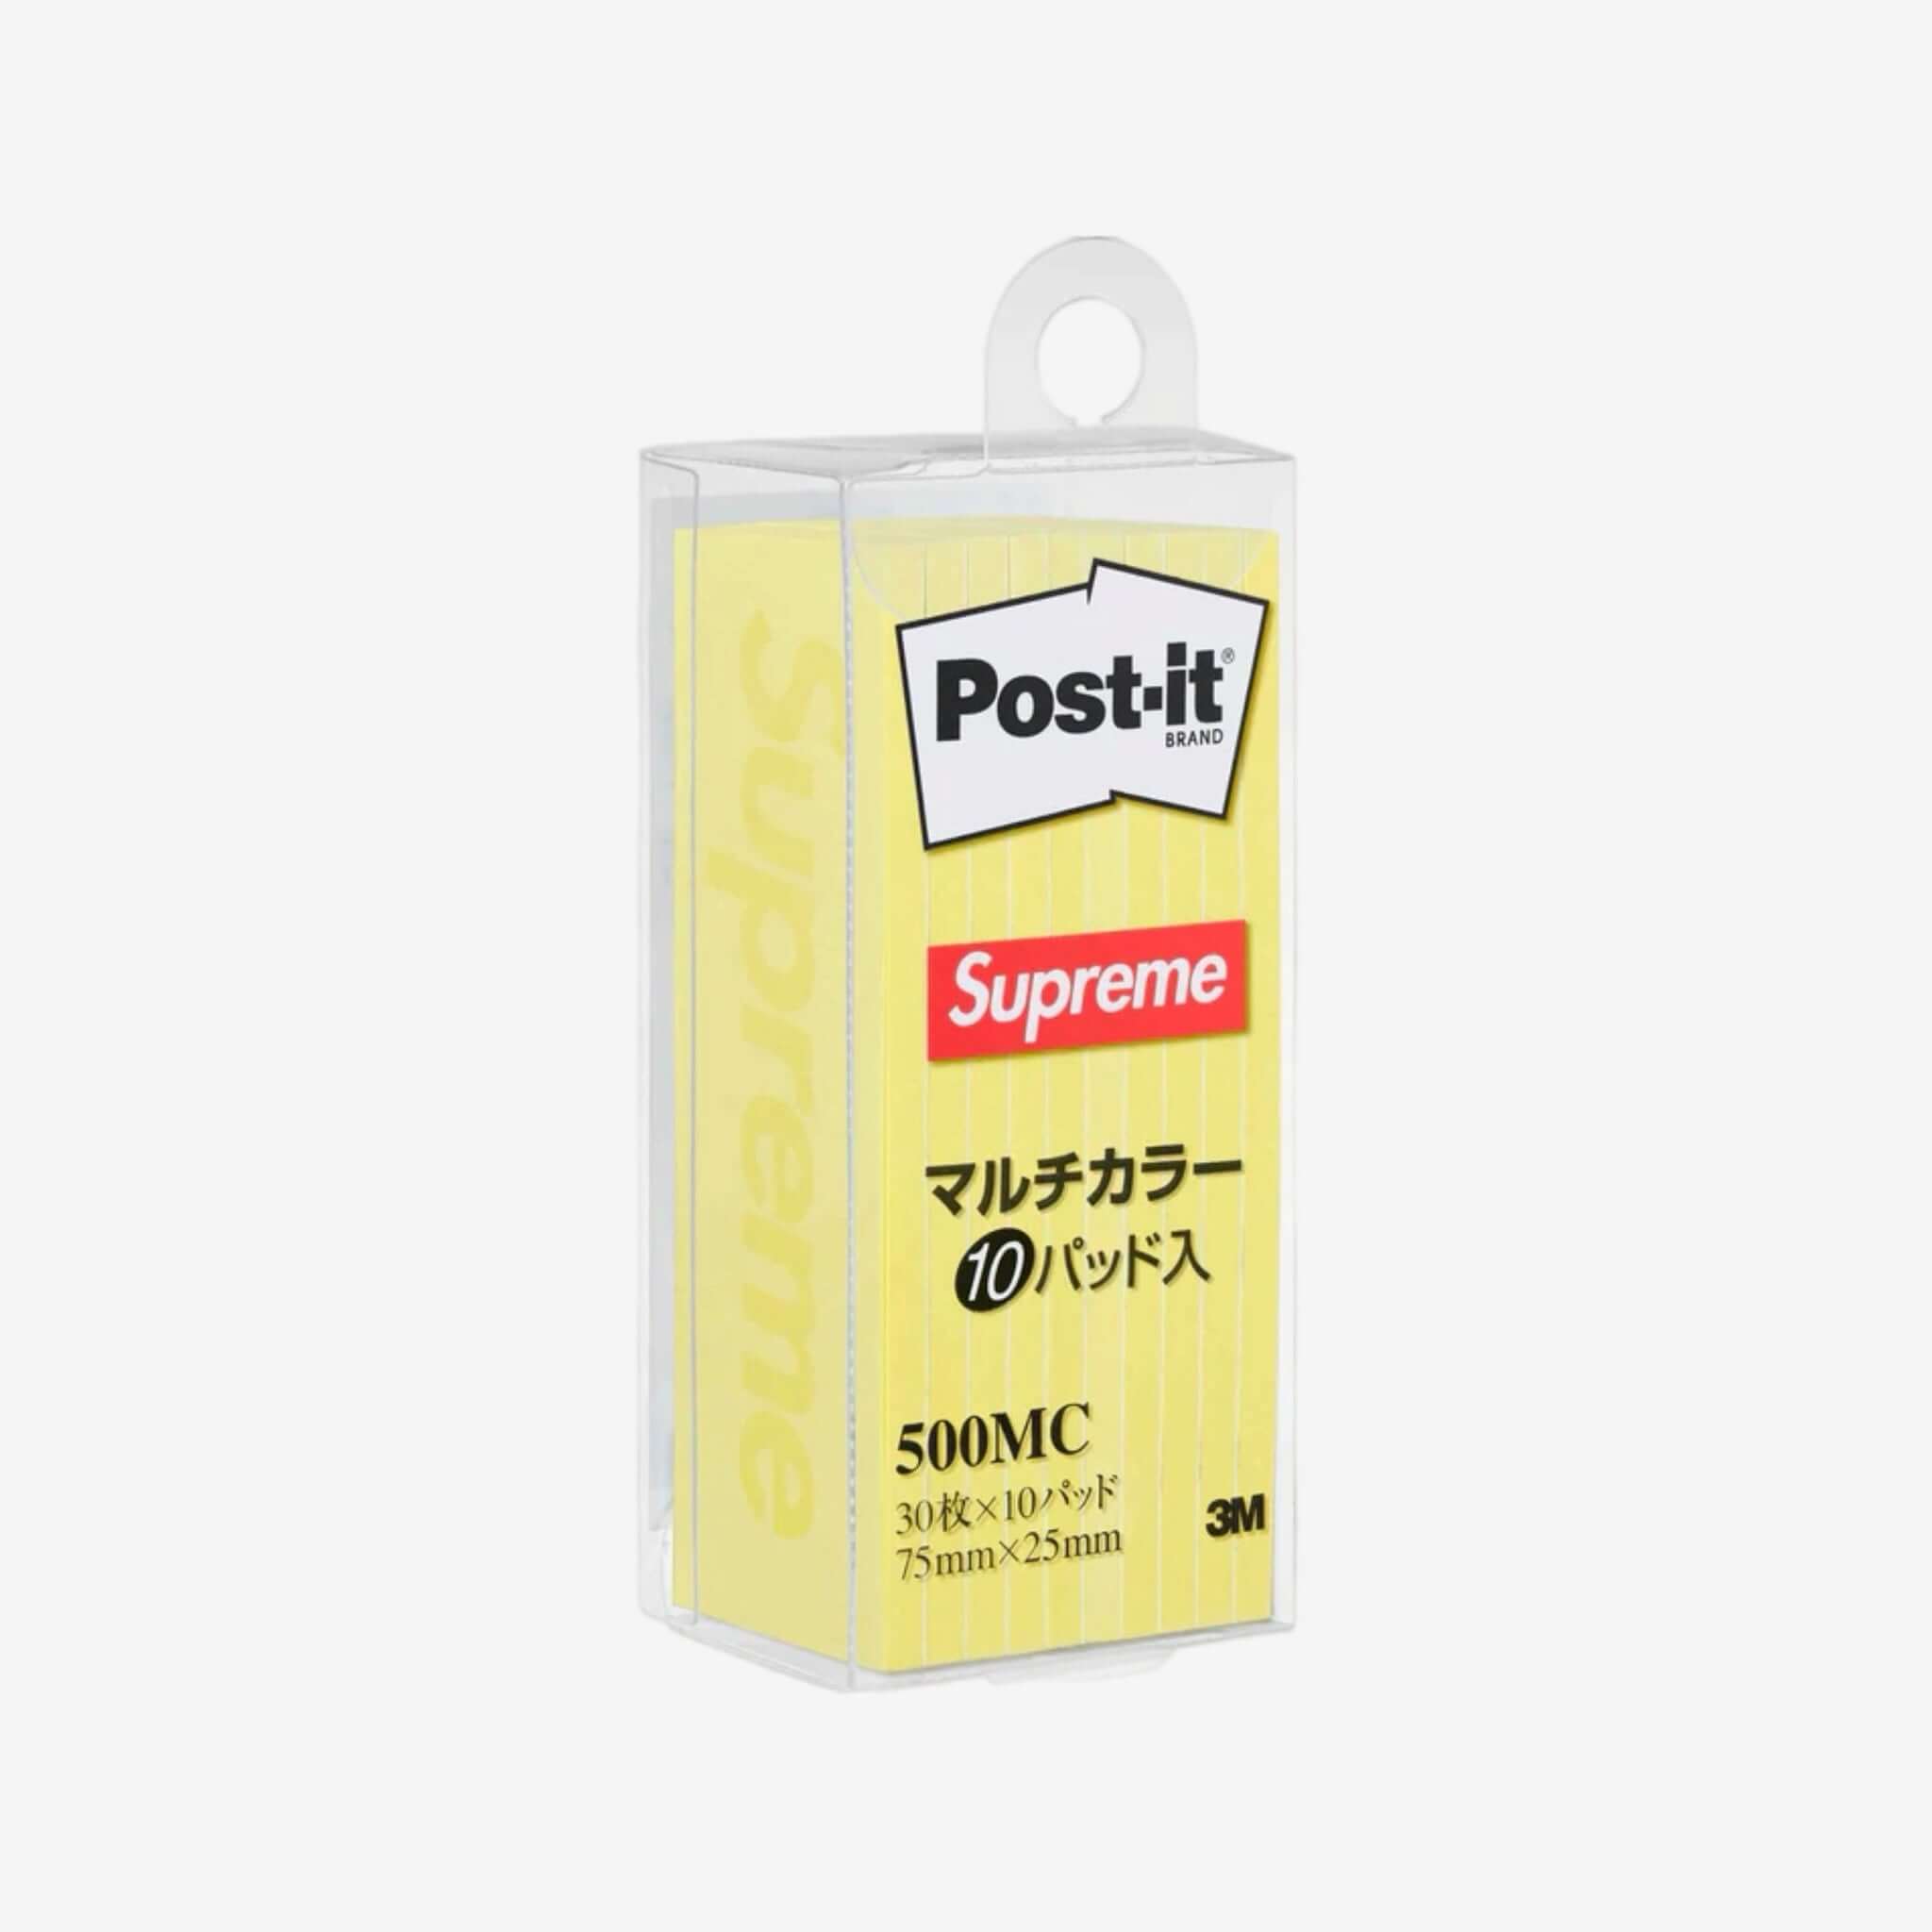 Supreme x Post-Its (10-pack)